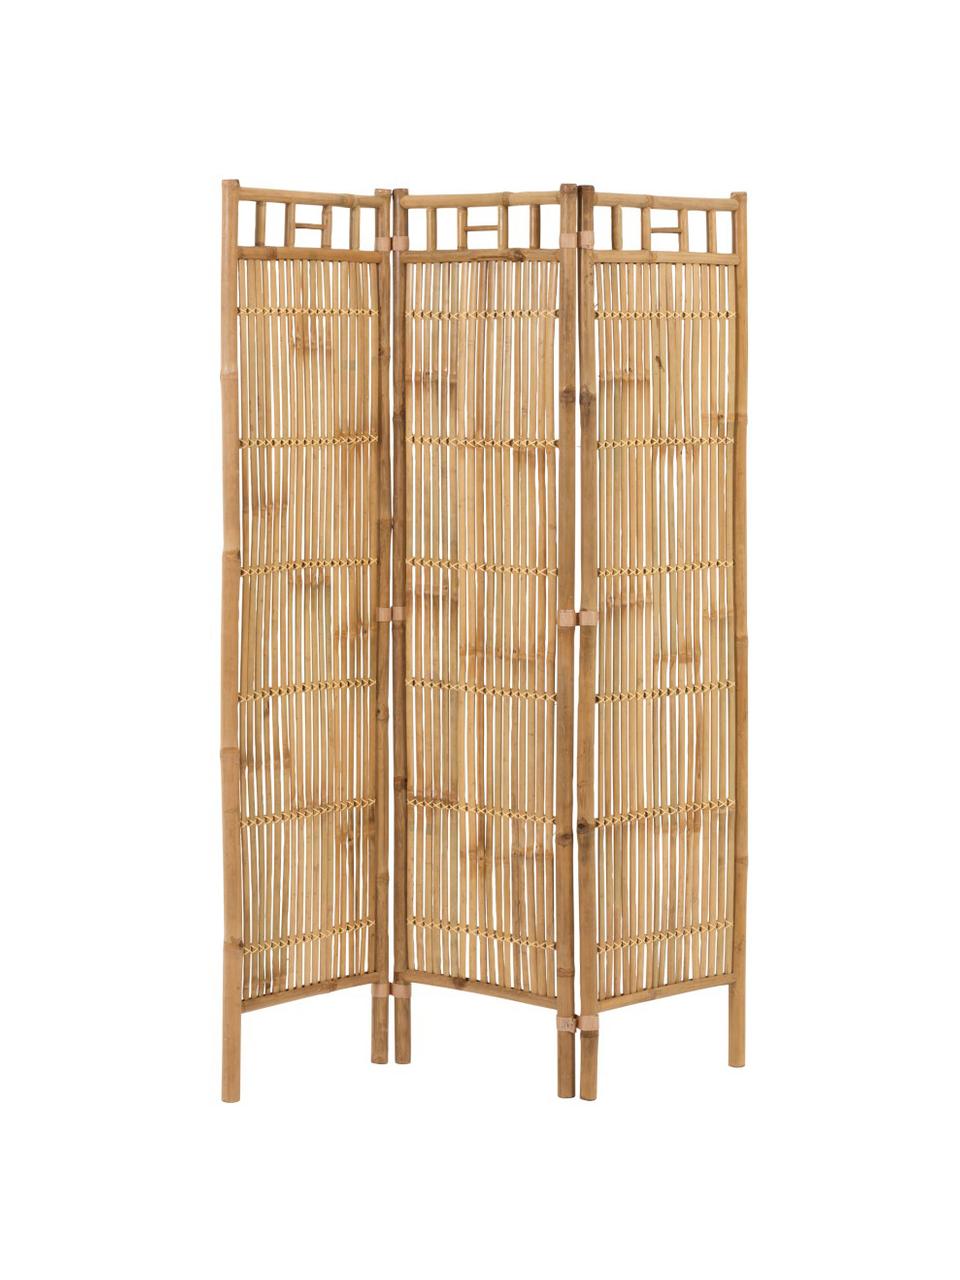 Rattan-Paravent Screen, Schilfrohr, Rattan, Bambus, Beige, 119 x 193 cm